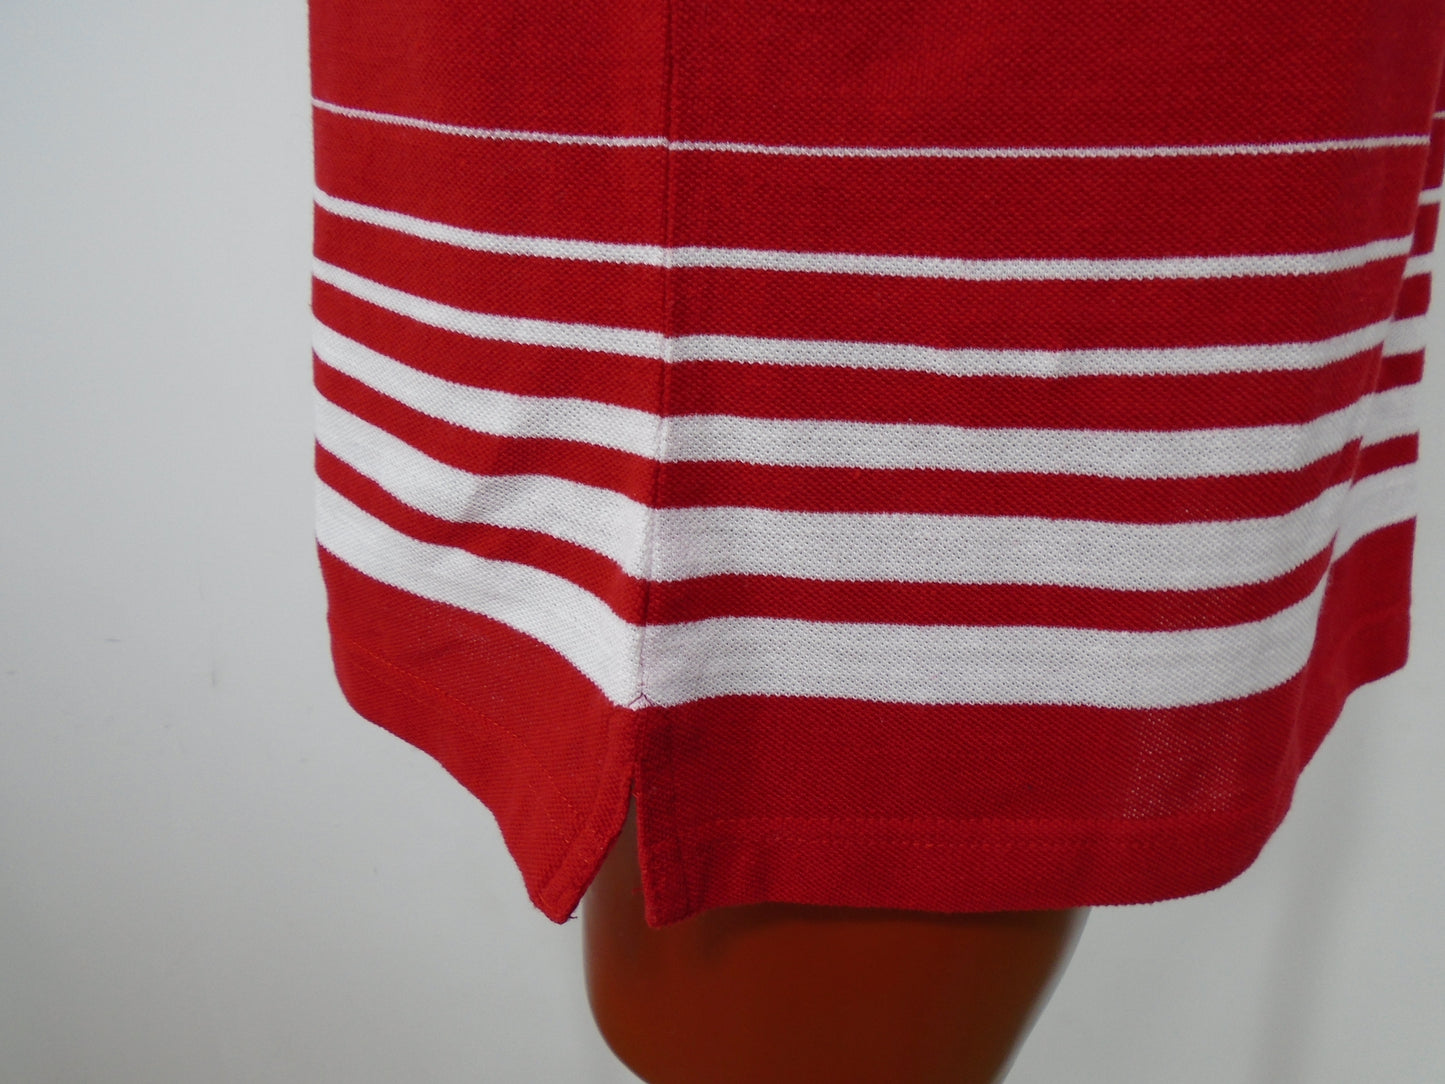 Damen-Poloshirt Unbekannte Marke. Rot. XL. Gebraucht. Sehr guter Zustand